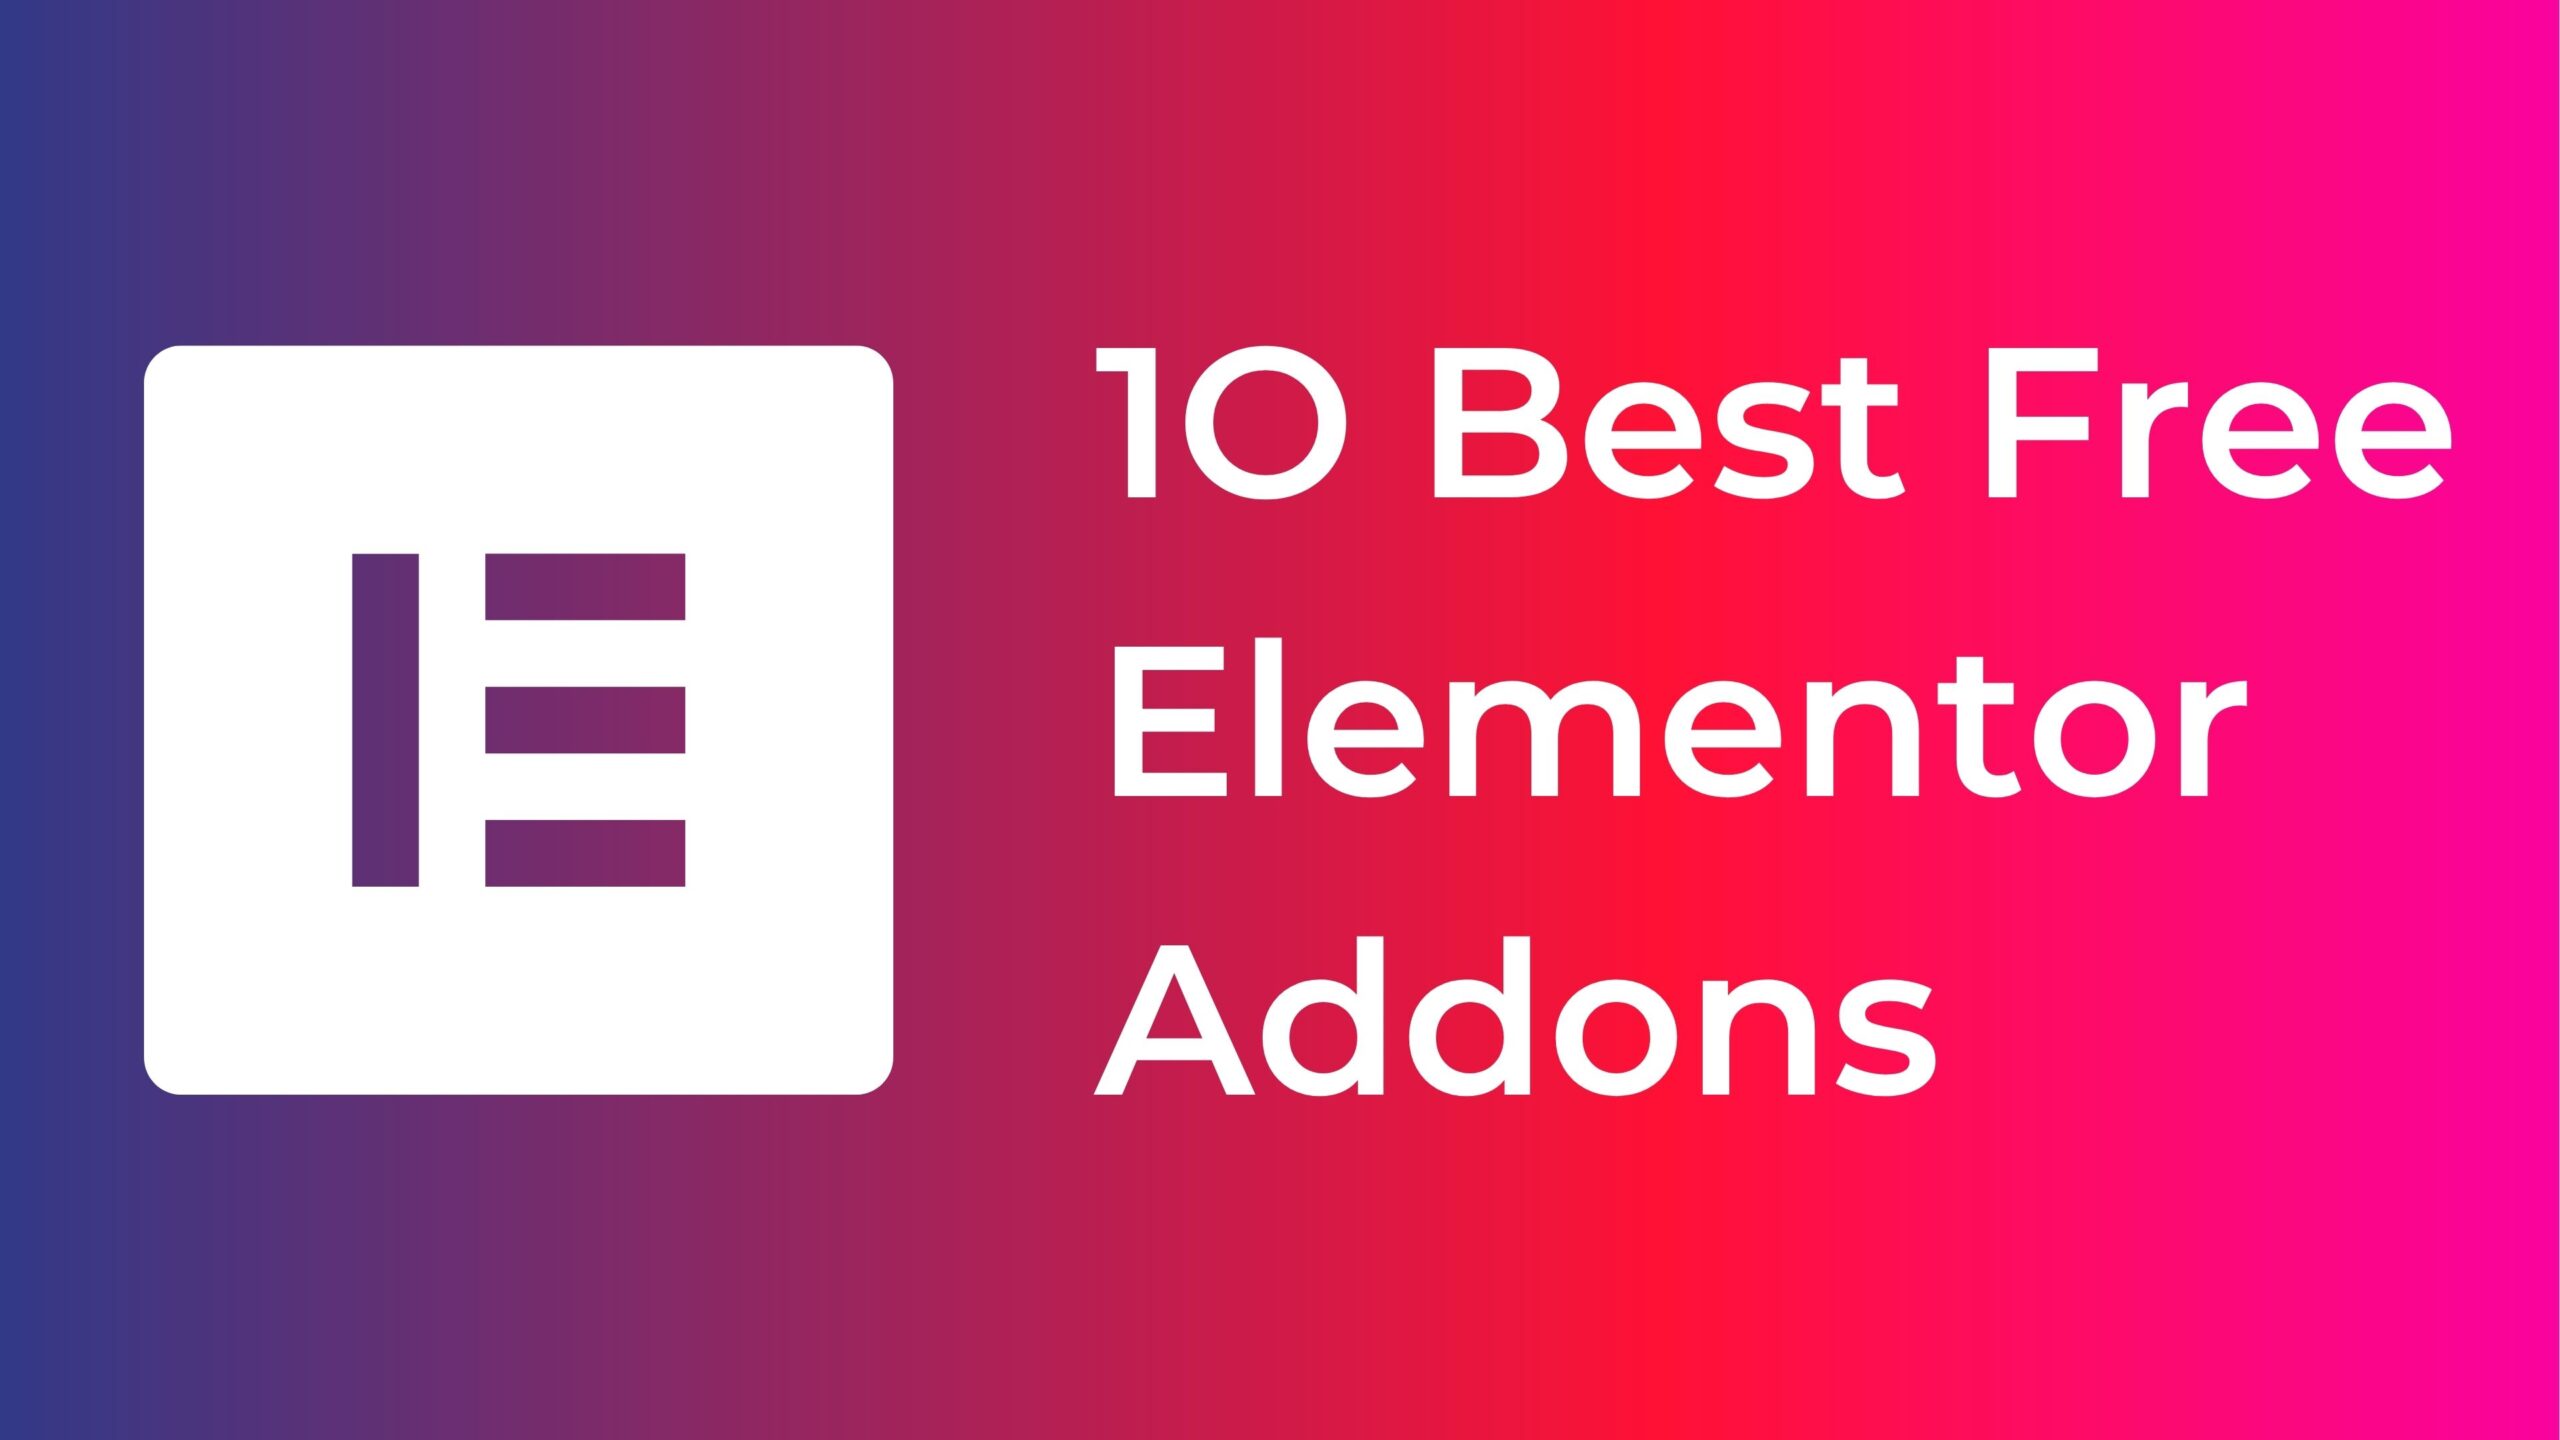 10 Best Free Elementor Addons for WordPress (2022)